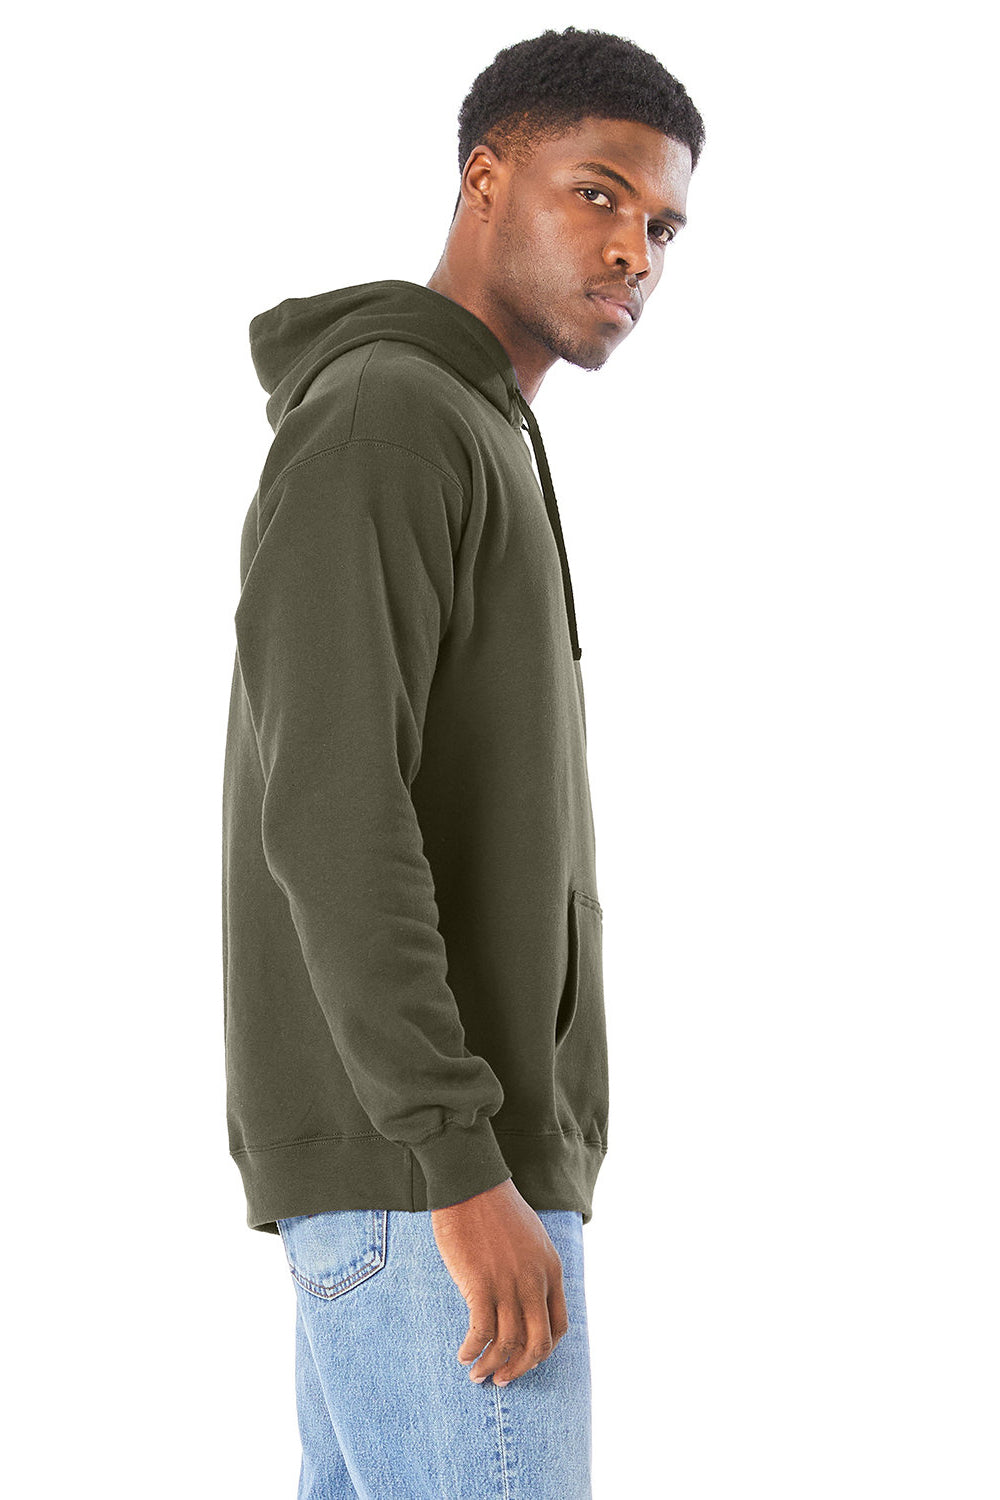 Hanes RS170 Mens Perfect Sweats Hooded Sweatshirt Hoodie Fatigue Green Side